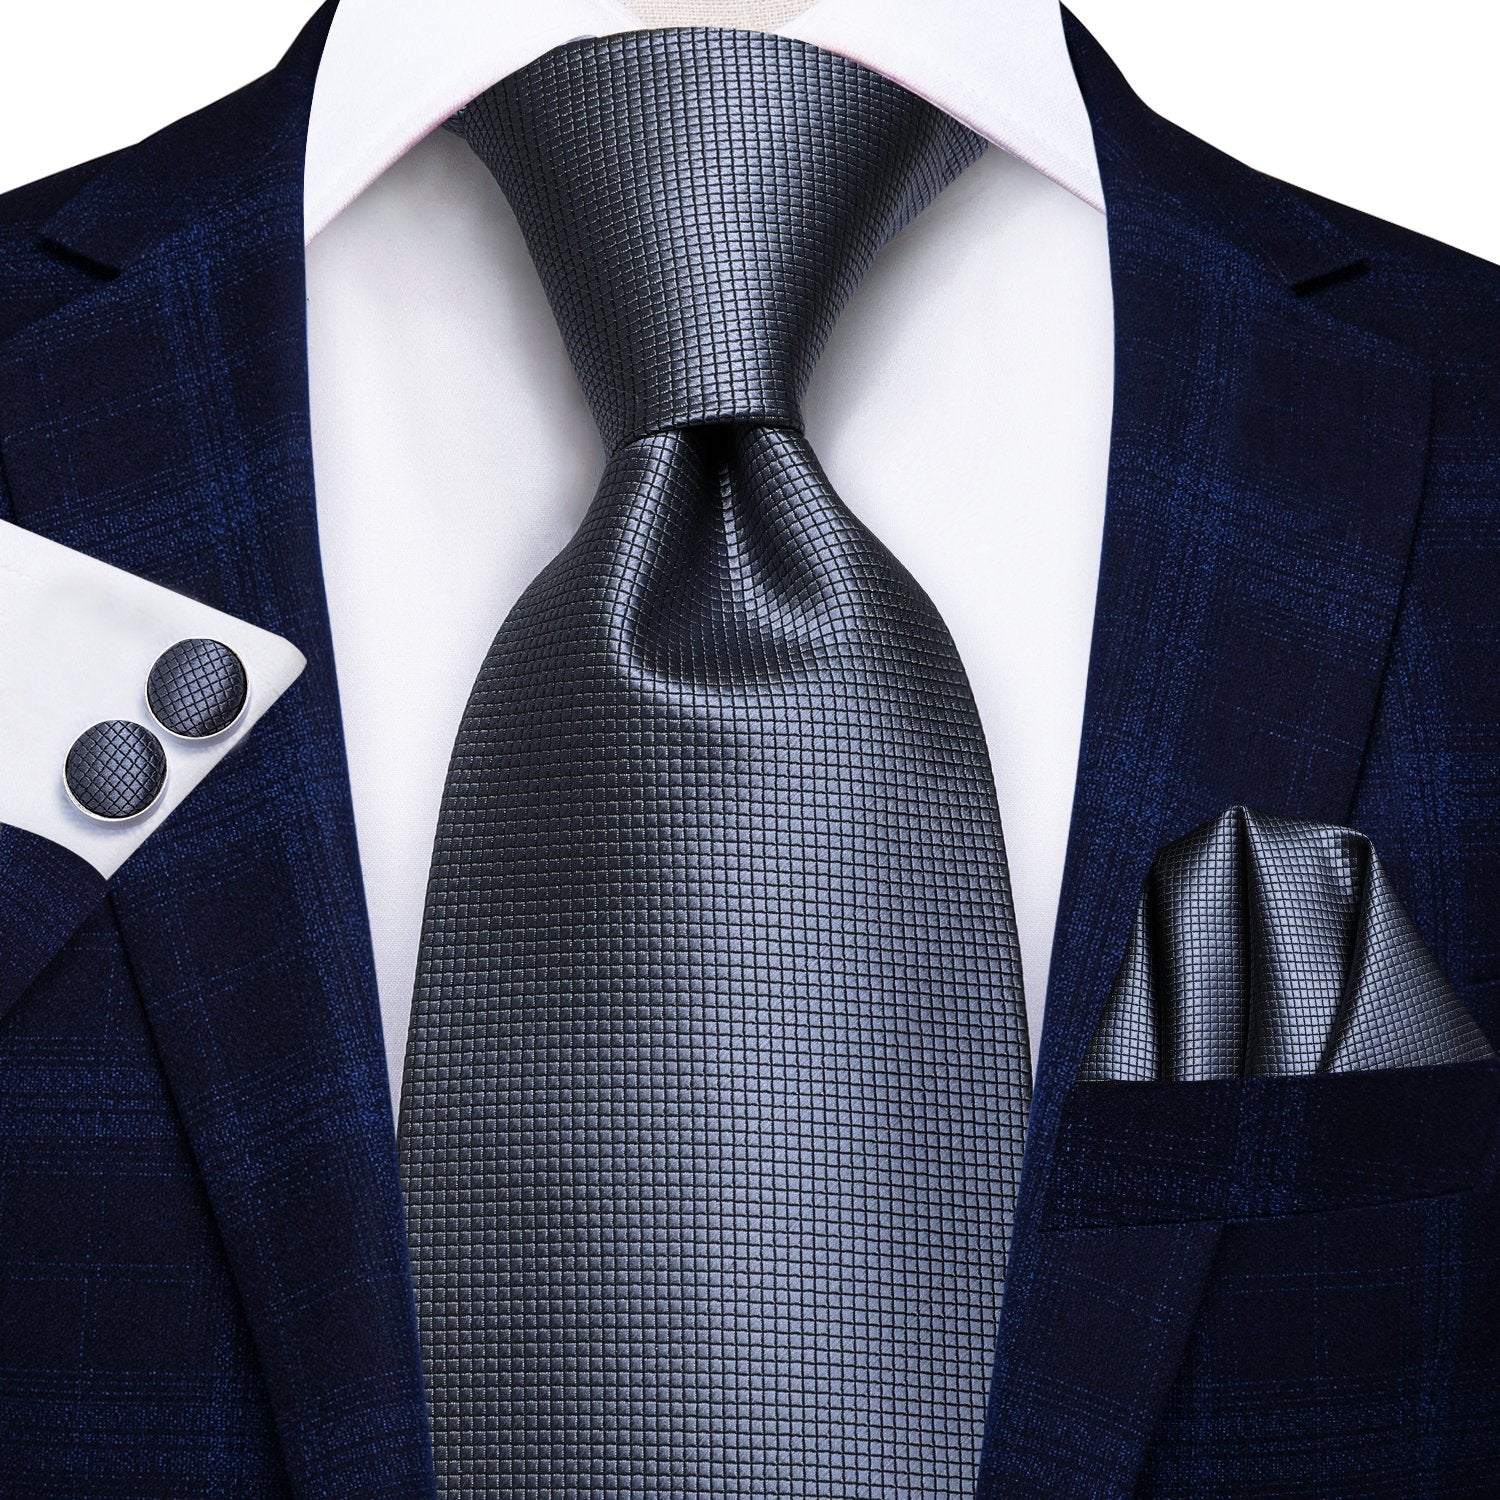 Grey Solid Tie Handkerchief Cufflinks Set with Wedding Brooch